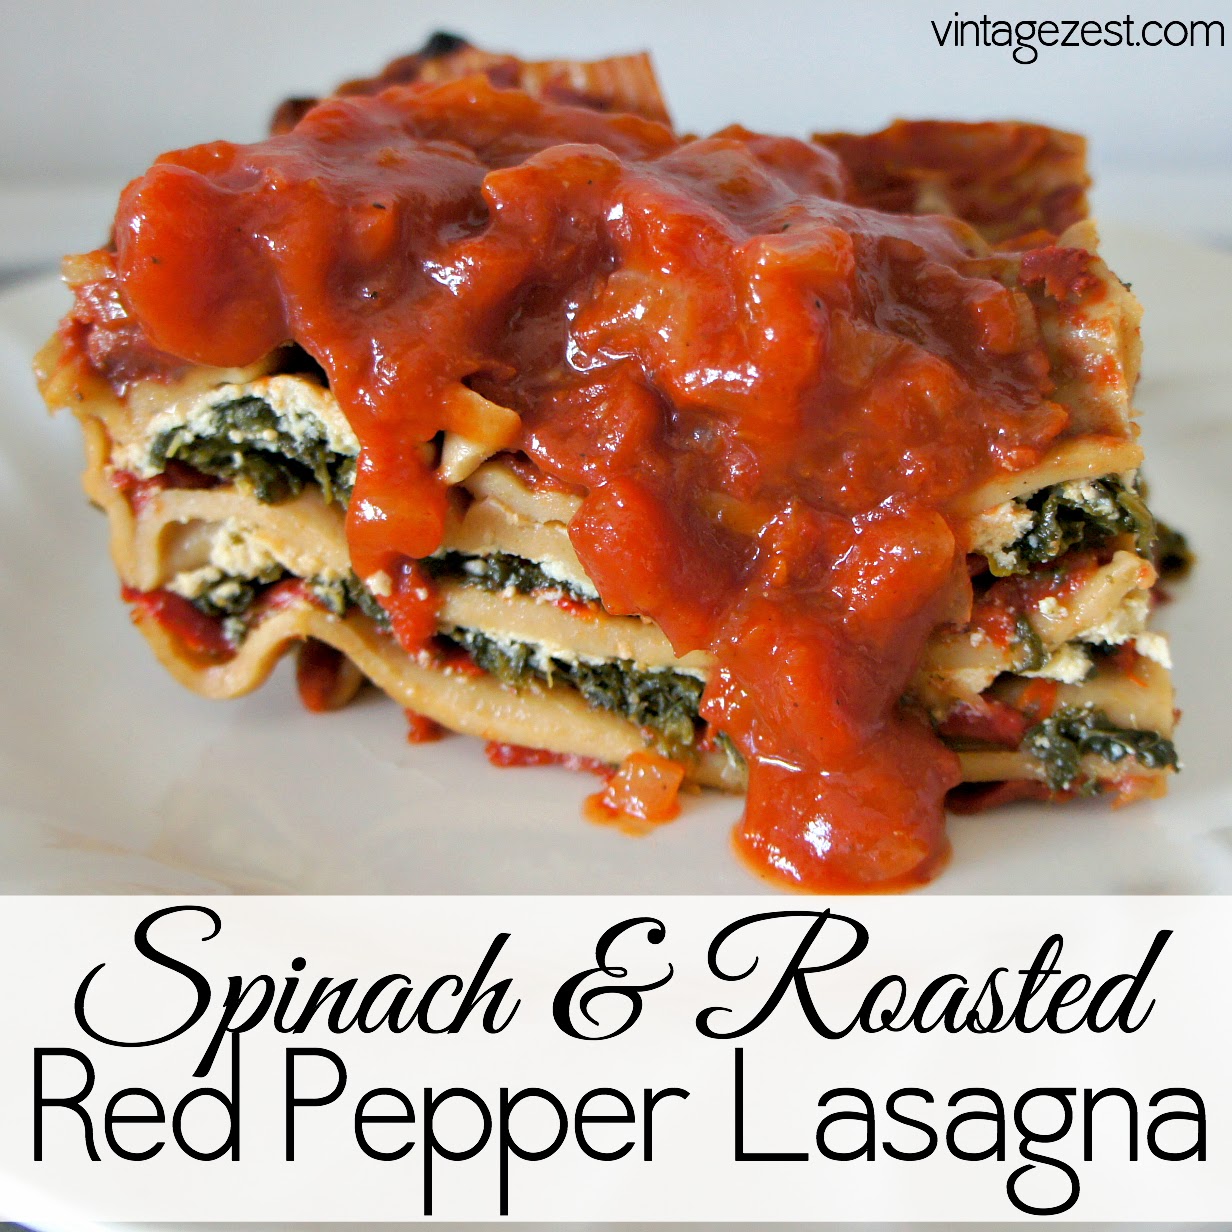 Spinach & Roasted Red Pepper Lasagna on Diane's Vintage Zest!